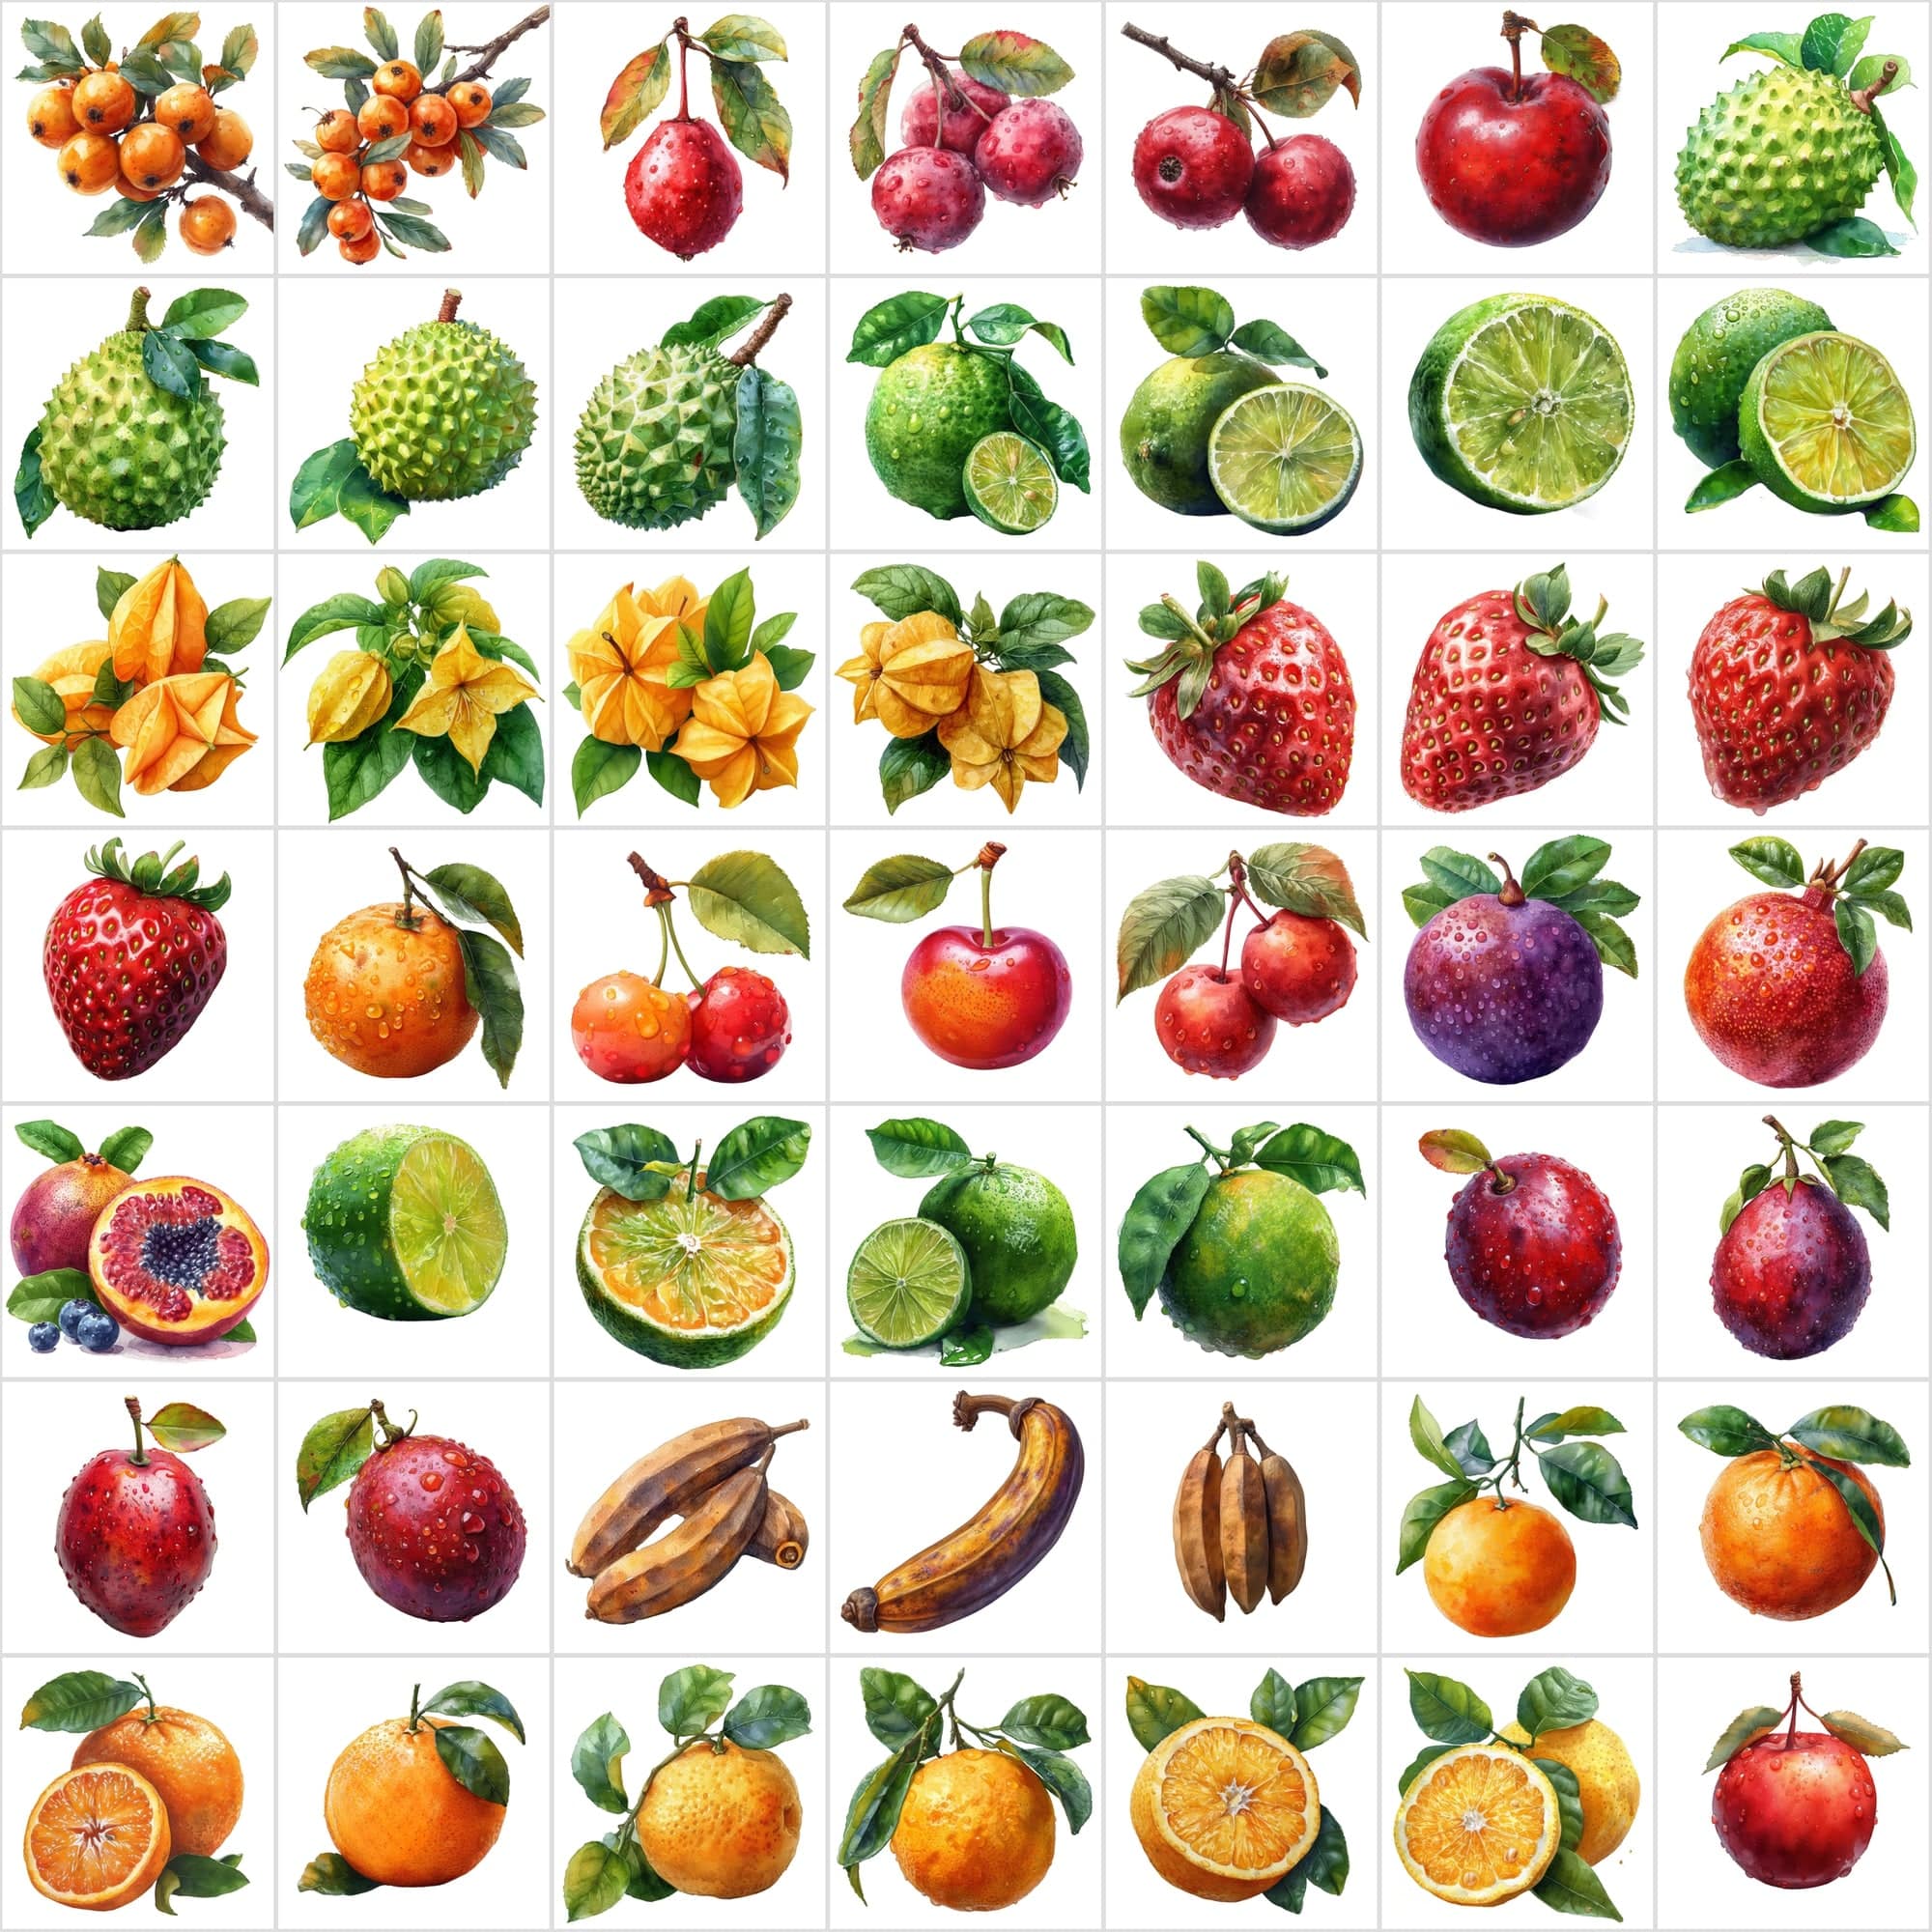 475 Watercolor Fruit Images, High-Quality PNG & JPG, Commercial License Digital Download Sumobundle